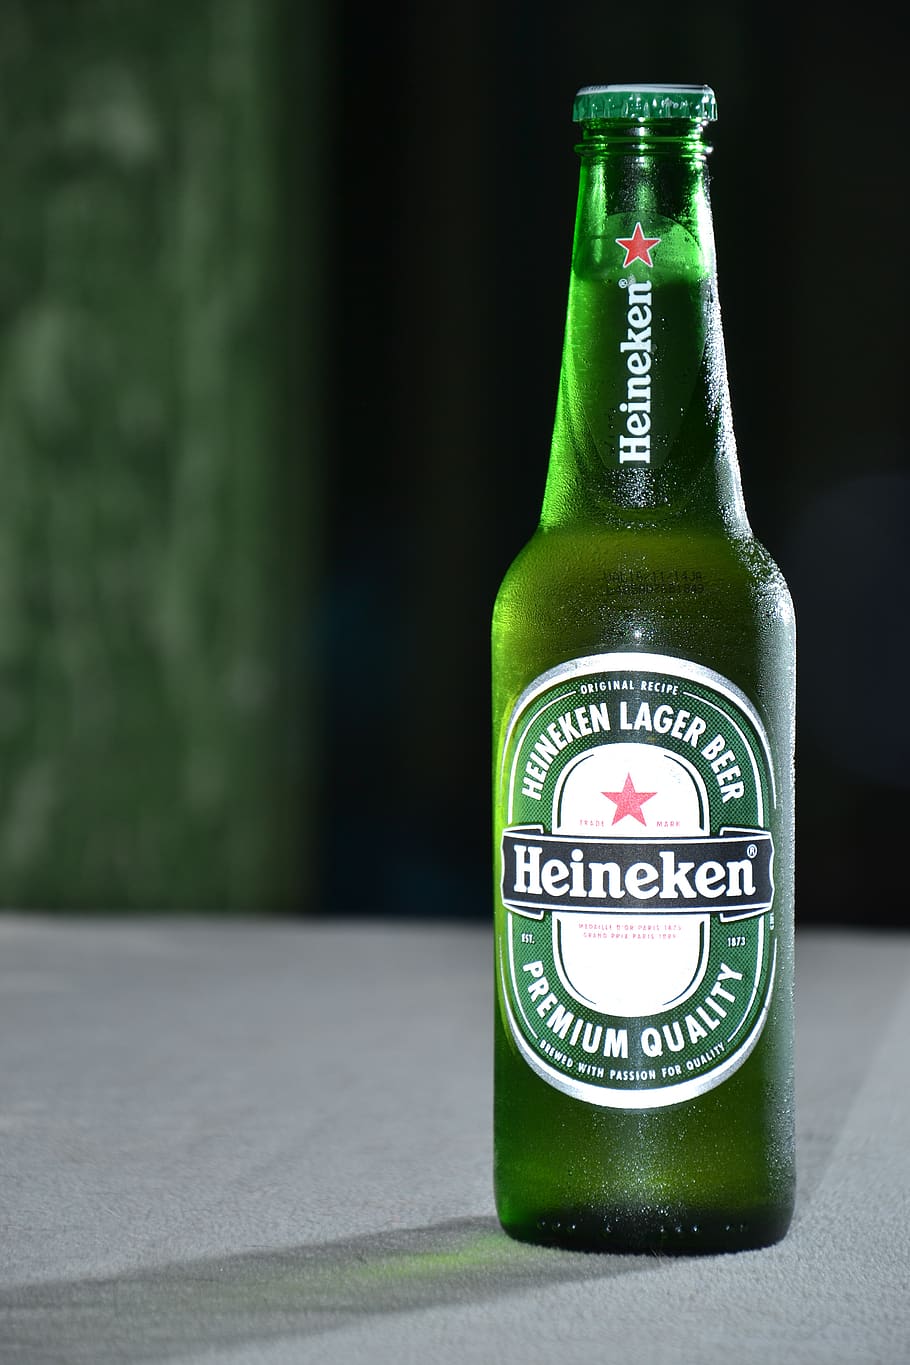 heineken, beer, bottle, green, brightness, drinks, container